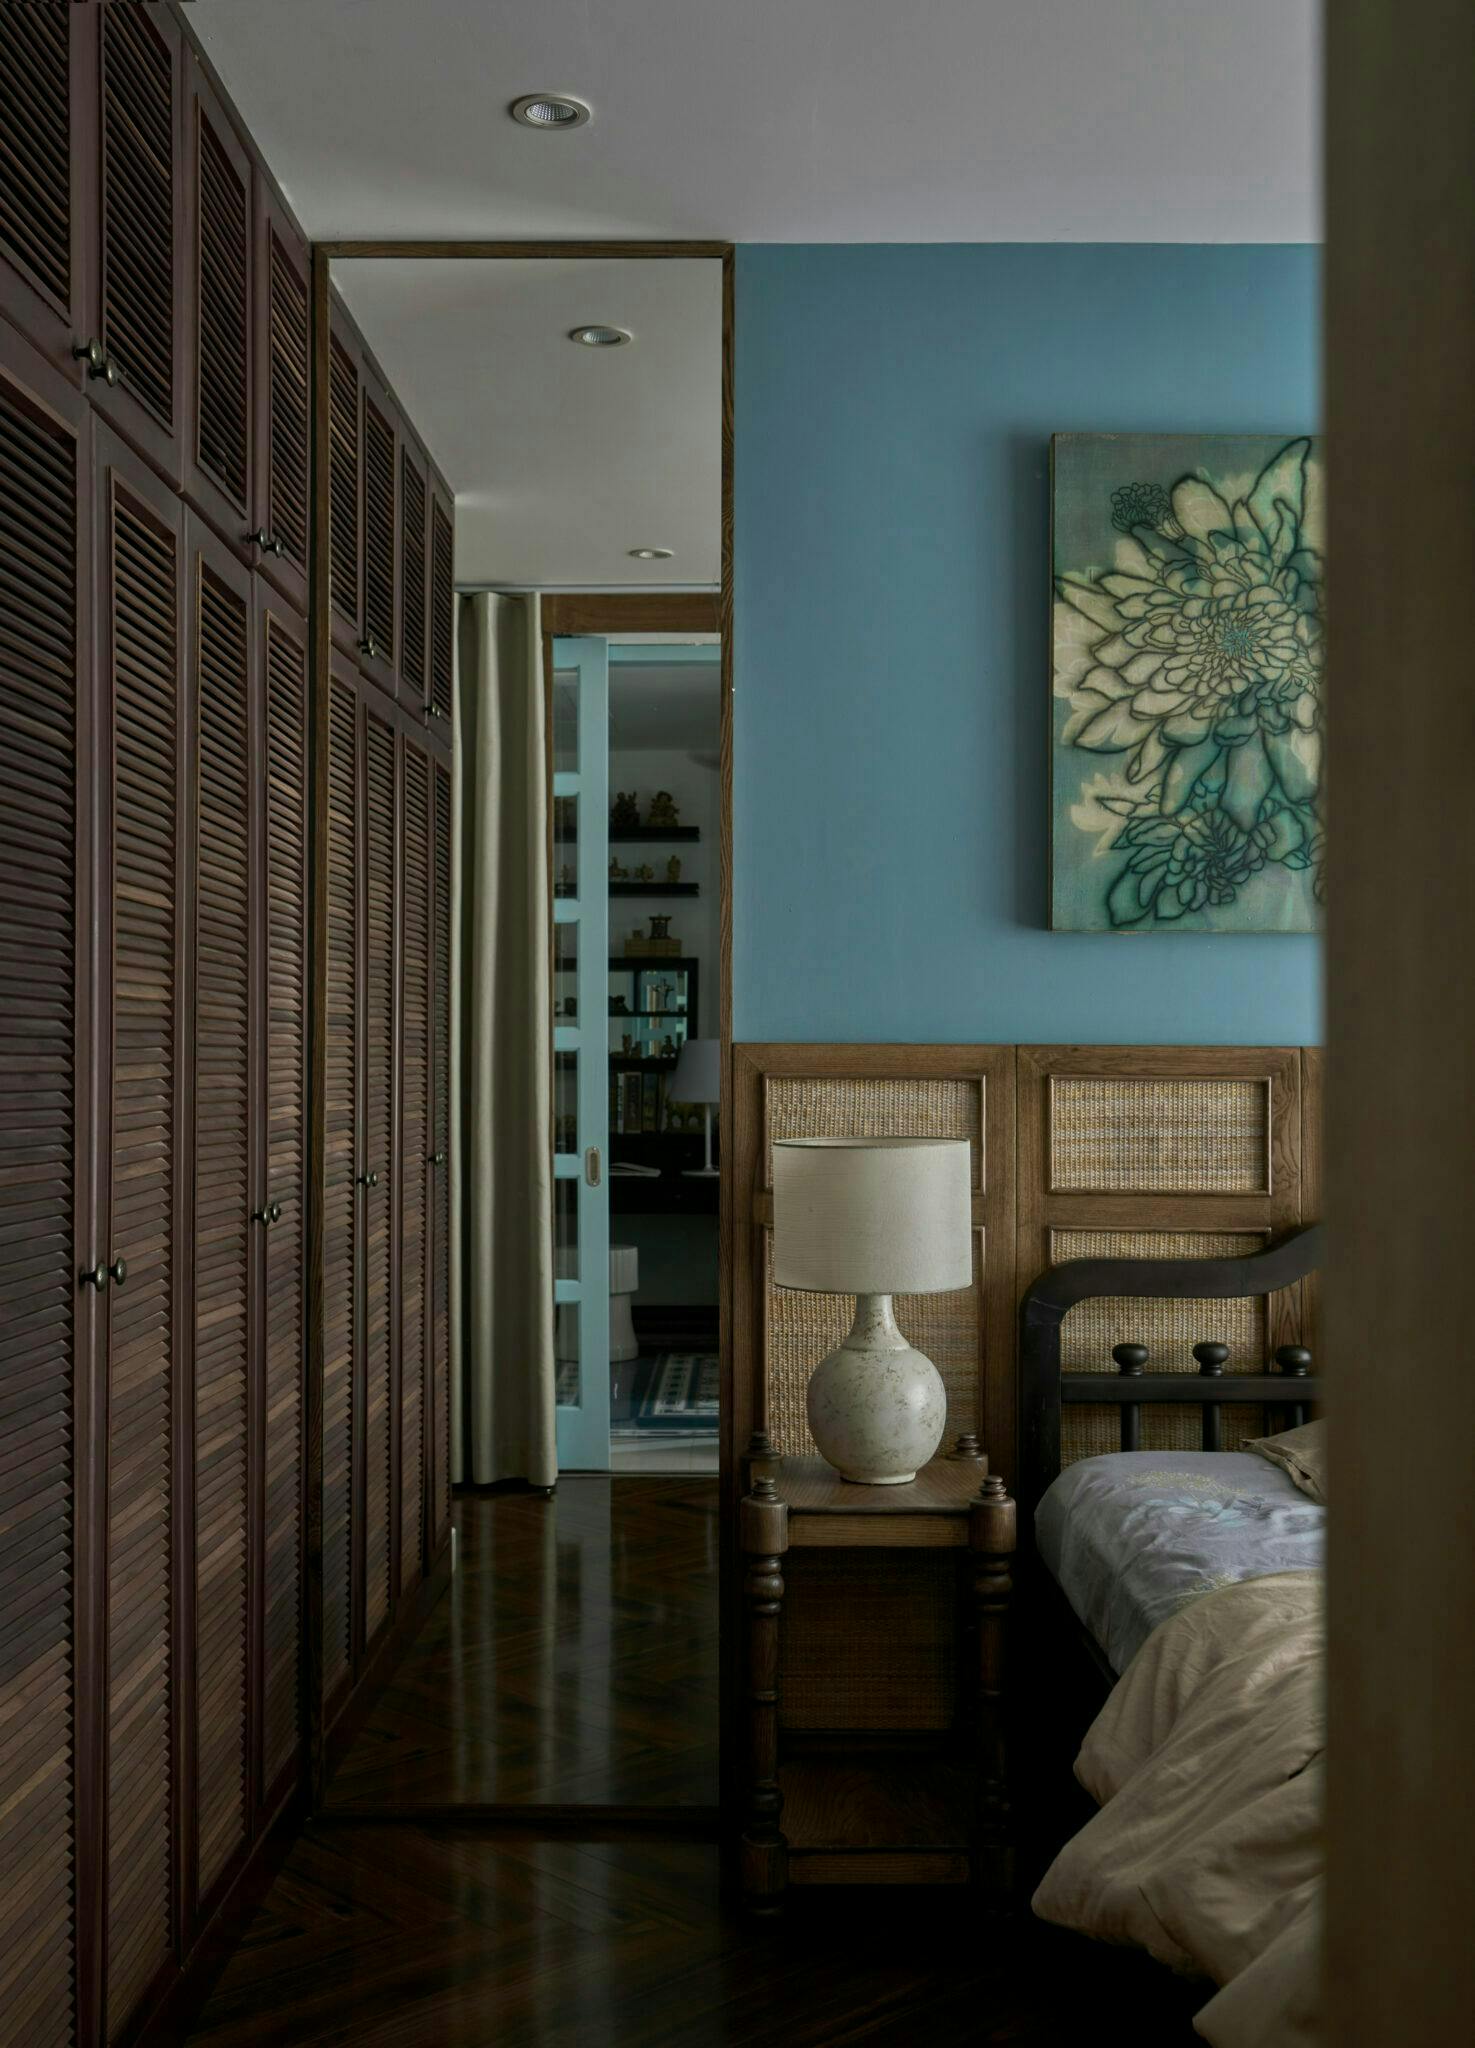 indoors interior design floor flooring wood hardwood lamp bed furniture home decor